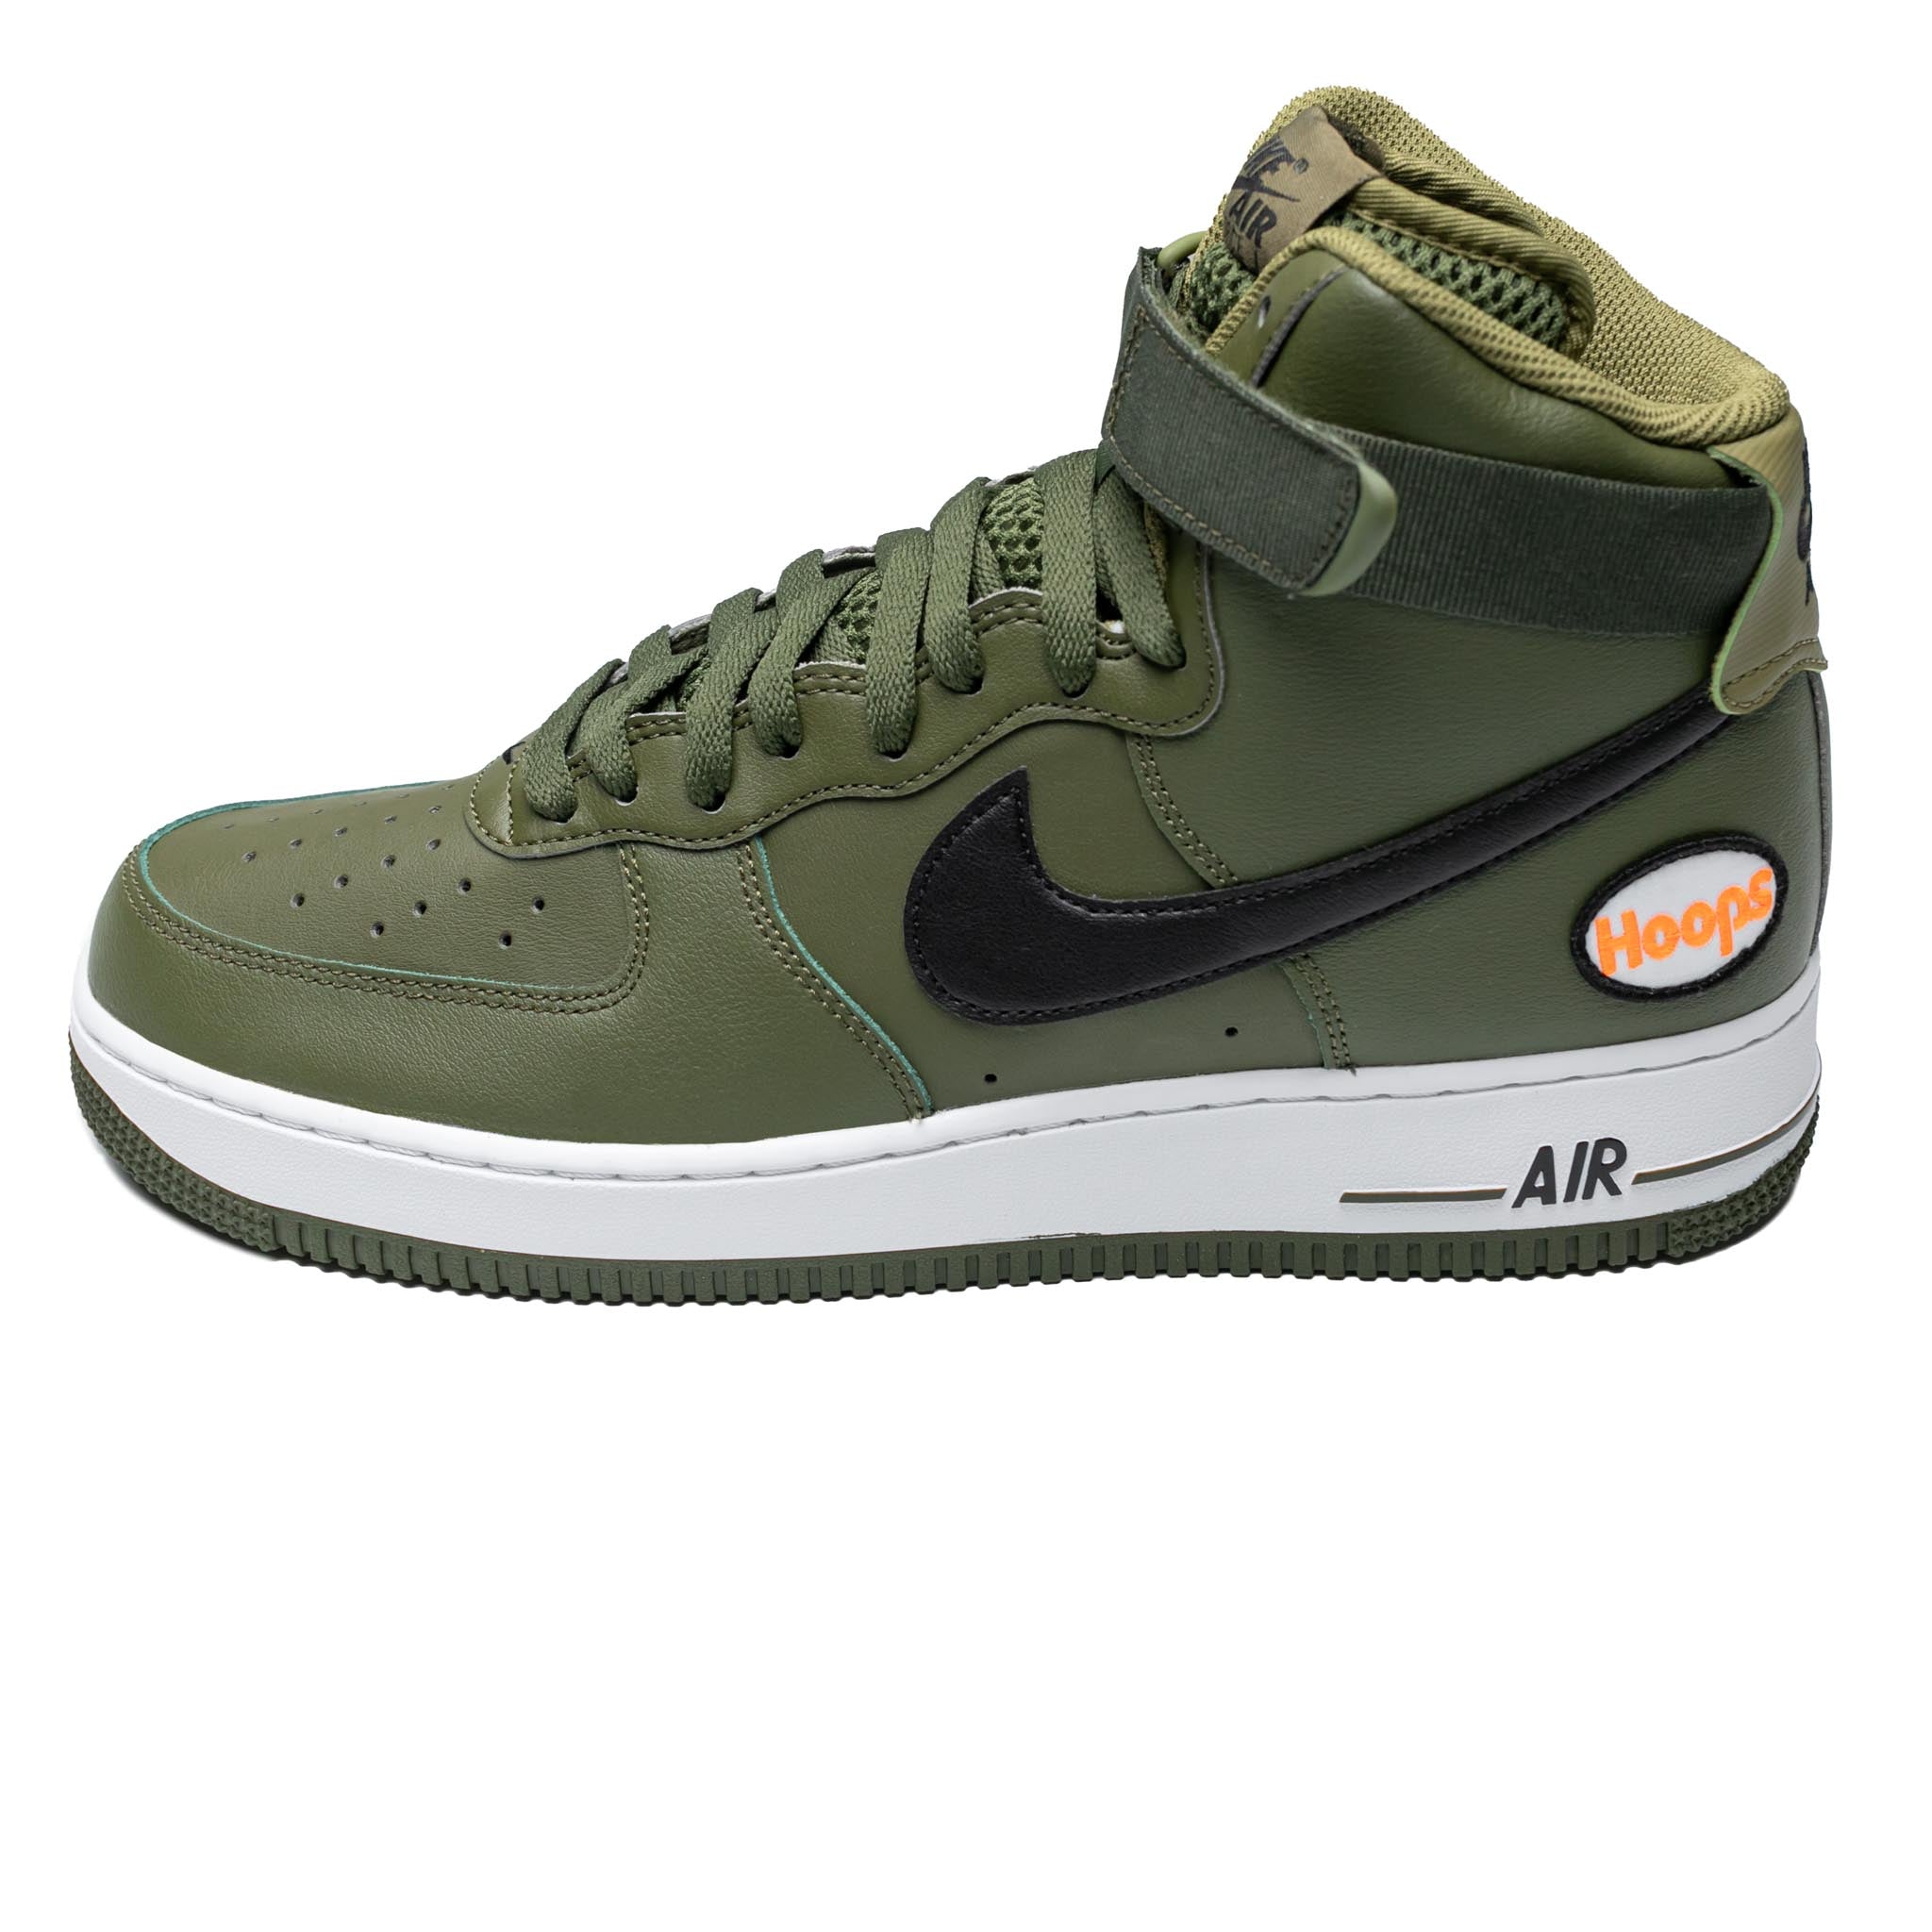 Nike Air Force 1 High '07 LV8 Hoops Green DH7453 300 Men'